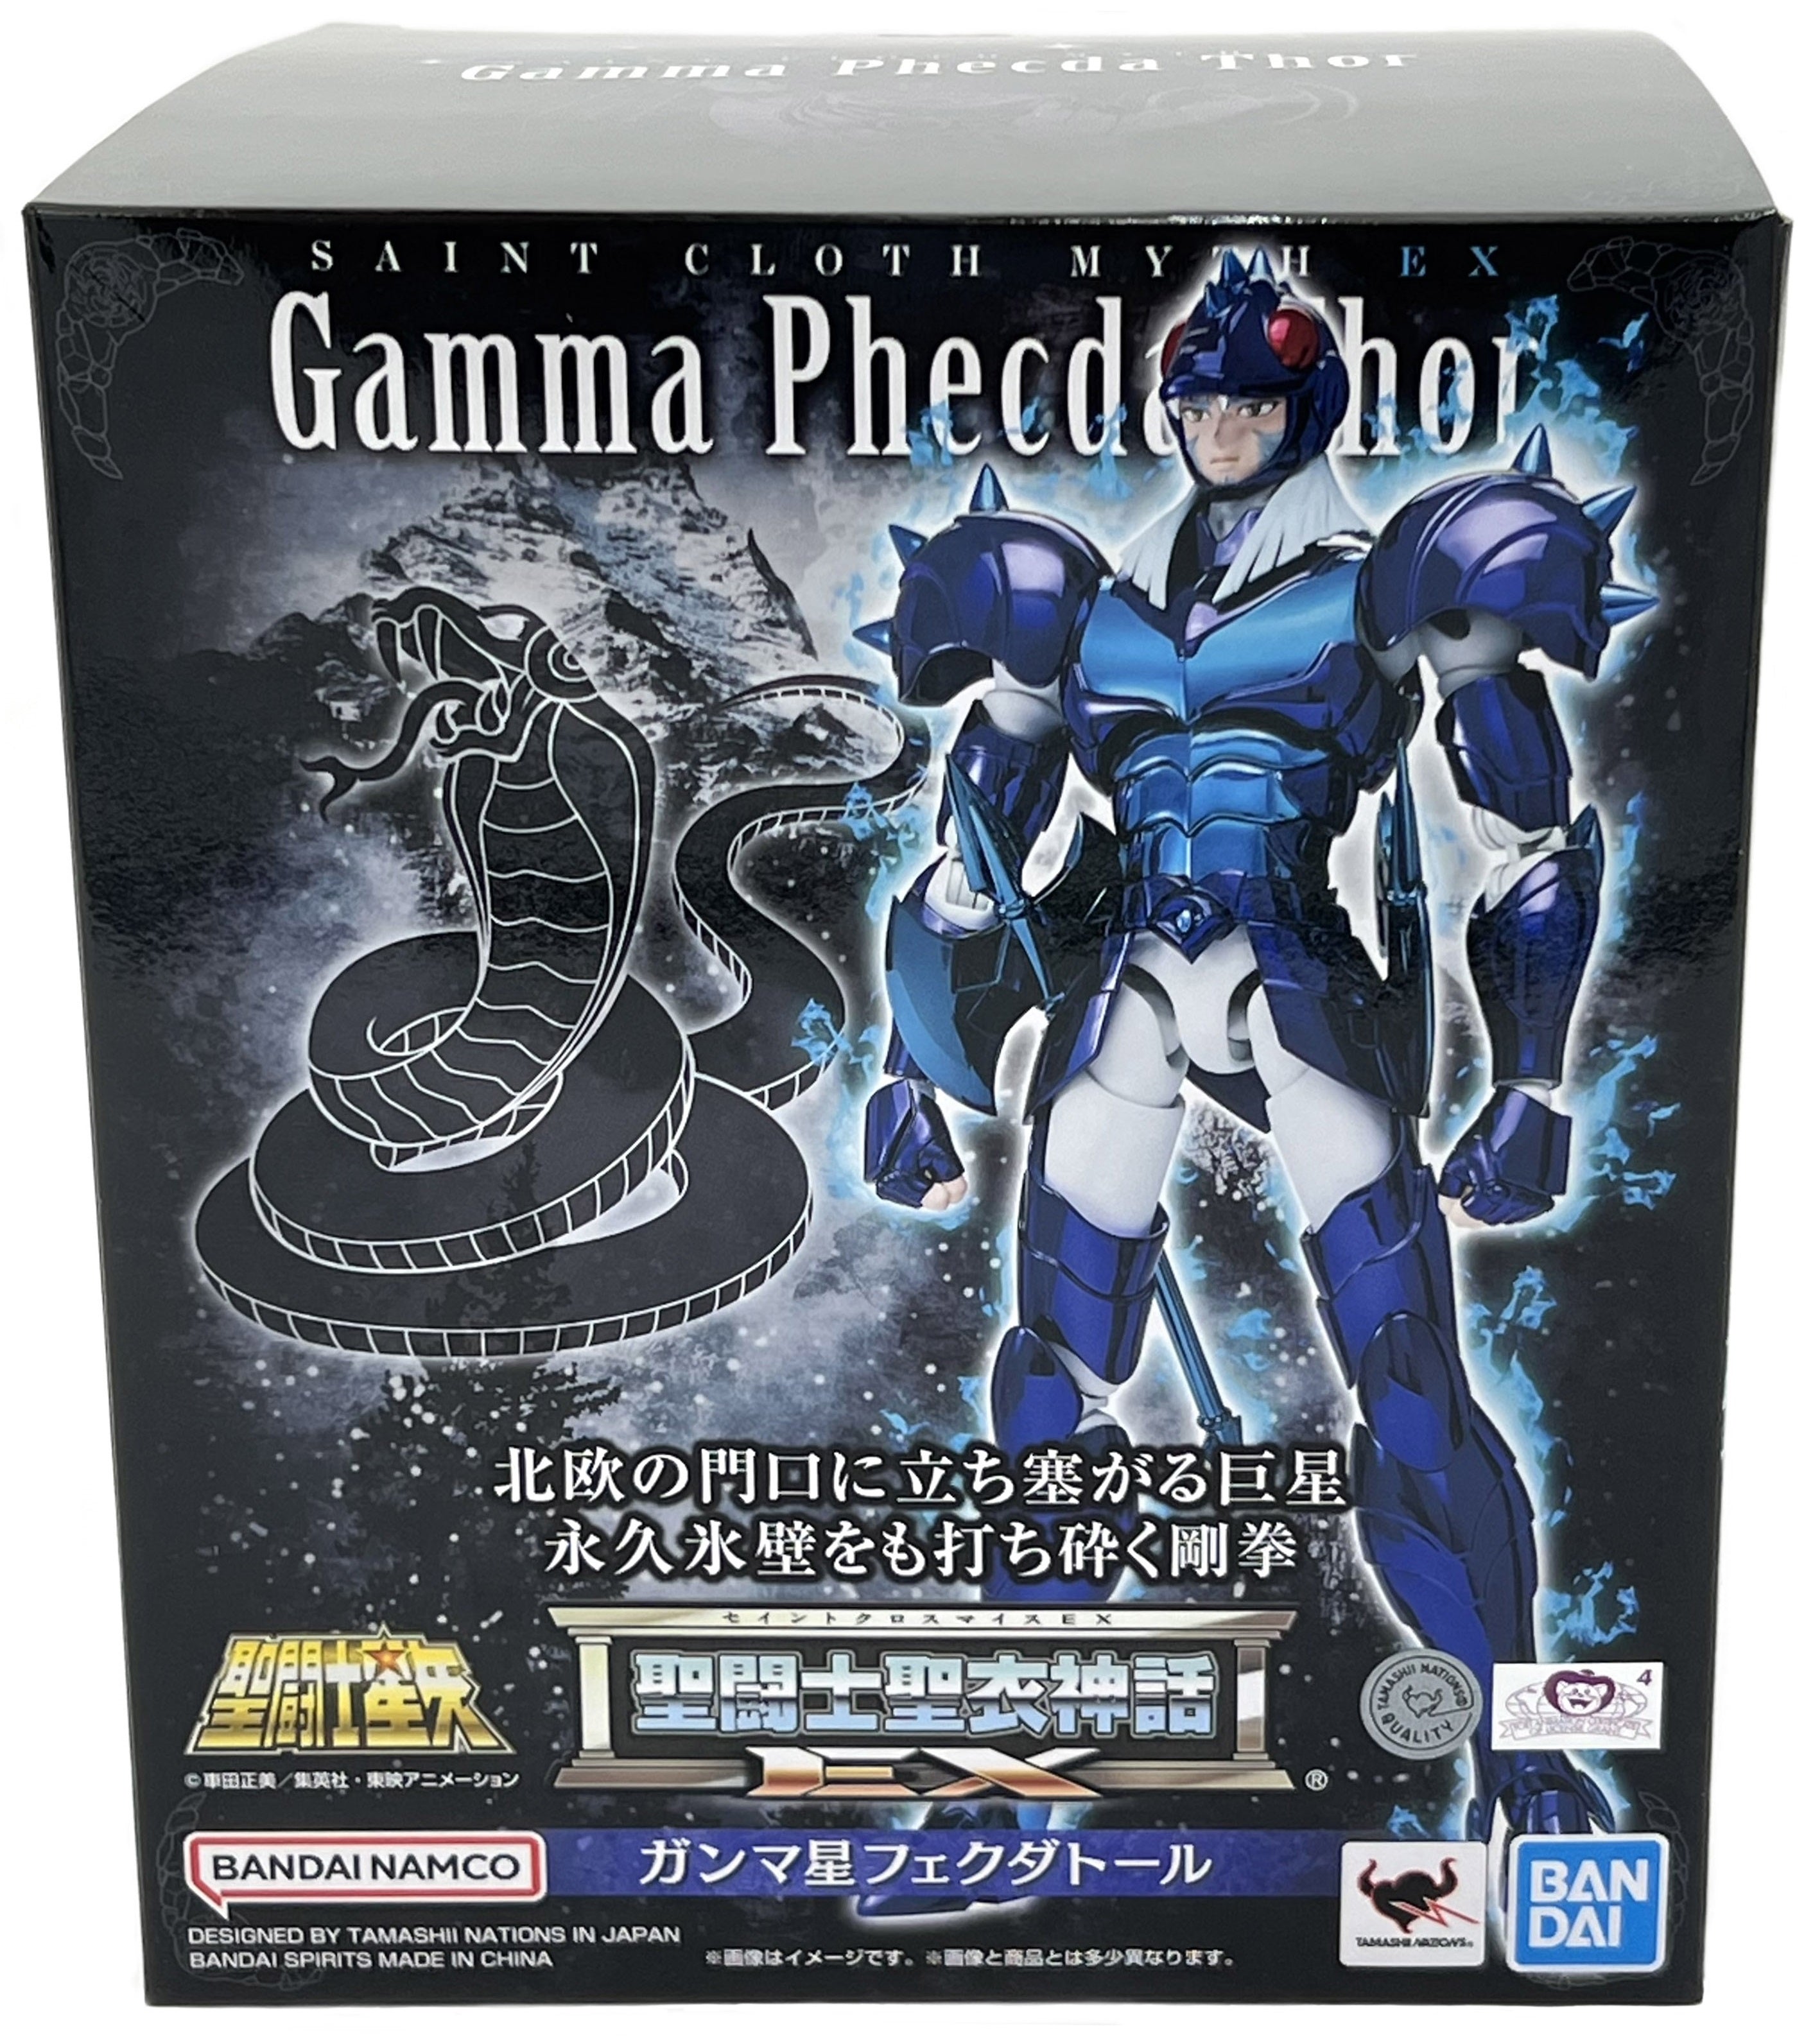 Bandai Saint Seiya Myth Cloth EX Thor Gamma Phecda